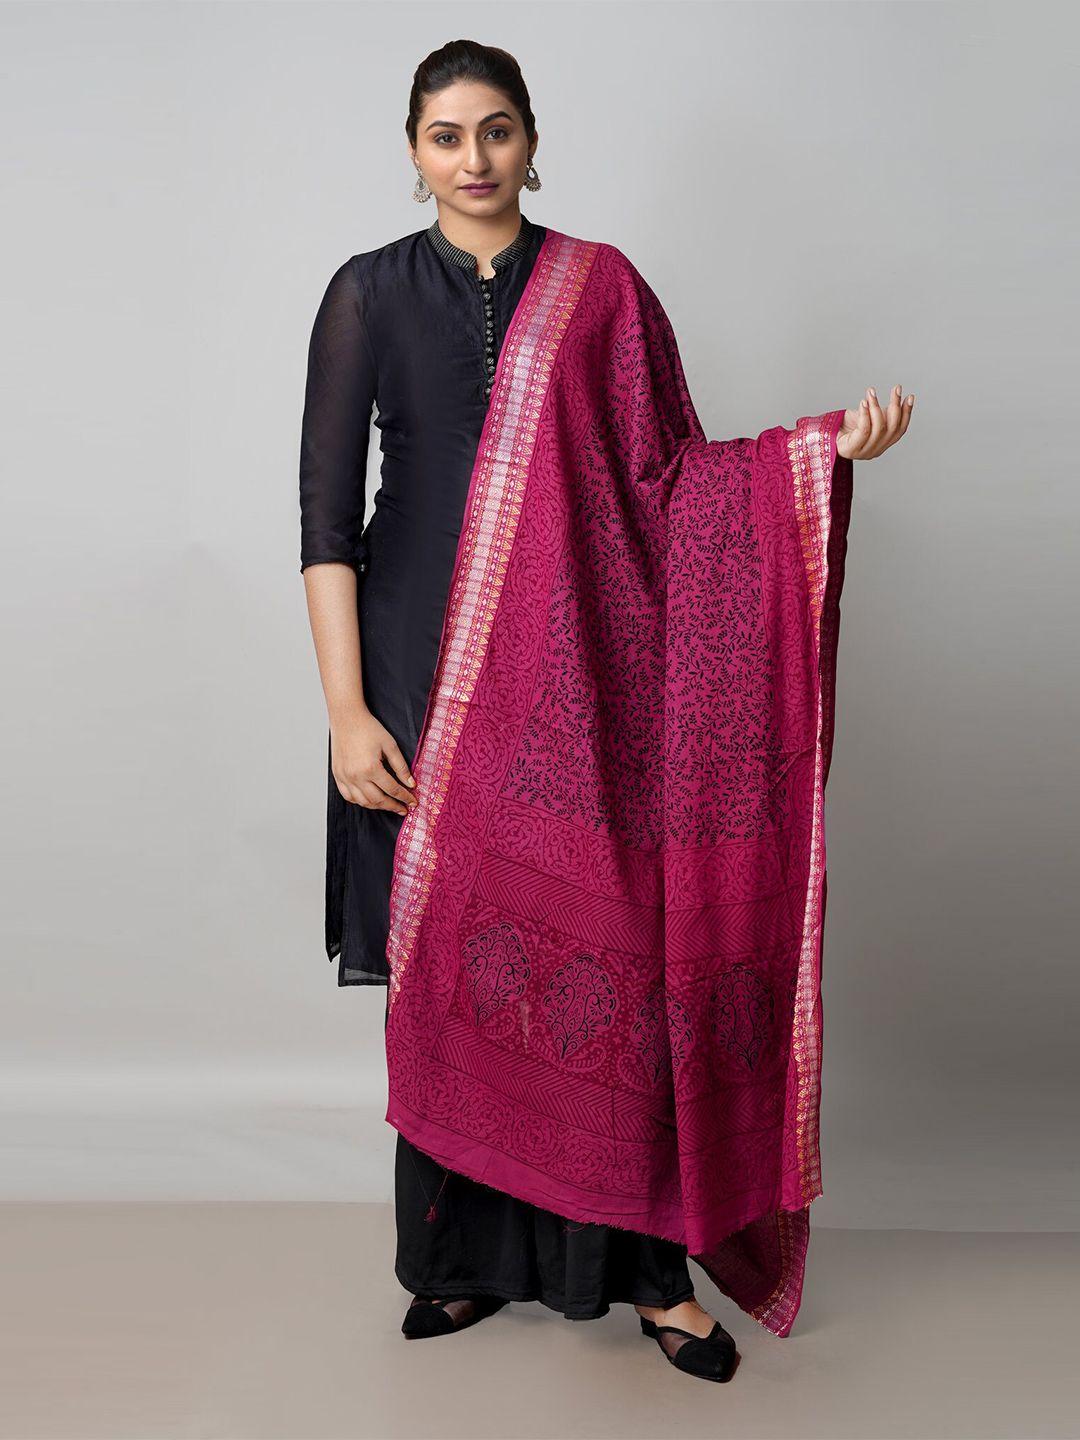 Unnati Silks Pink & Black Ethnic Motifs Printed Pure Cotton Dupatta with Zari